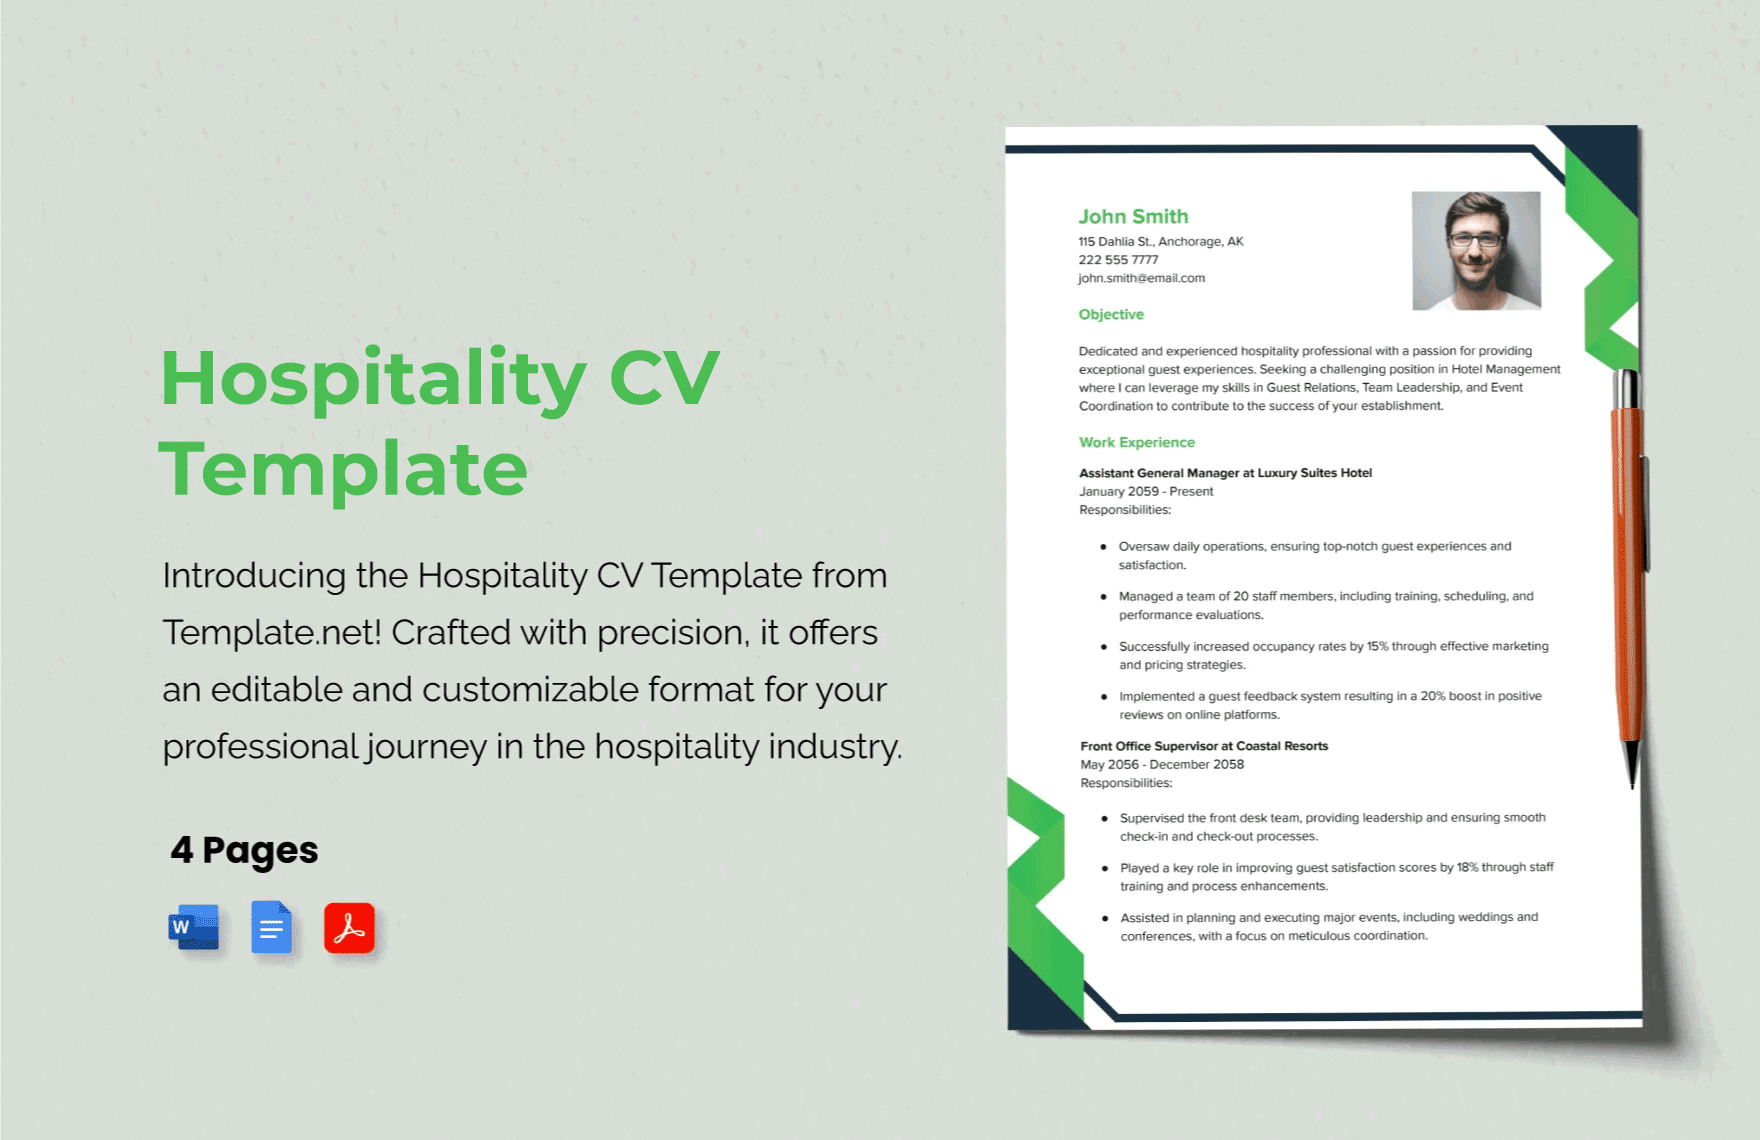 Hospitality CV Template